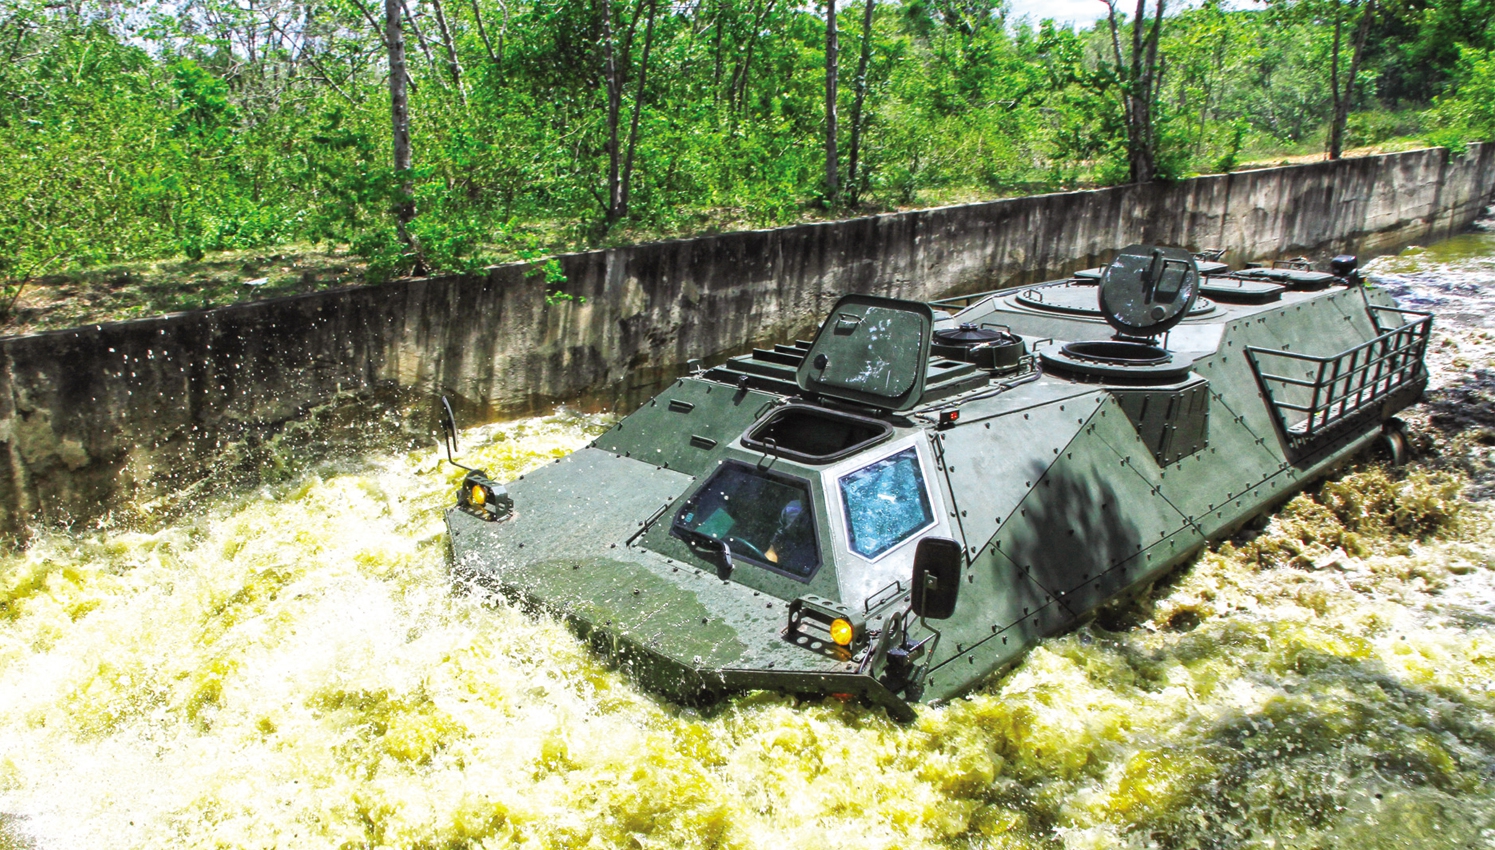 Panus R600 8x8 Infantry Fighting Vehicle